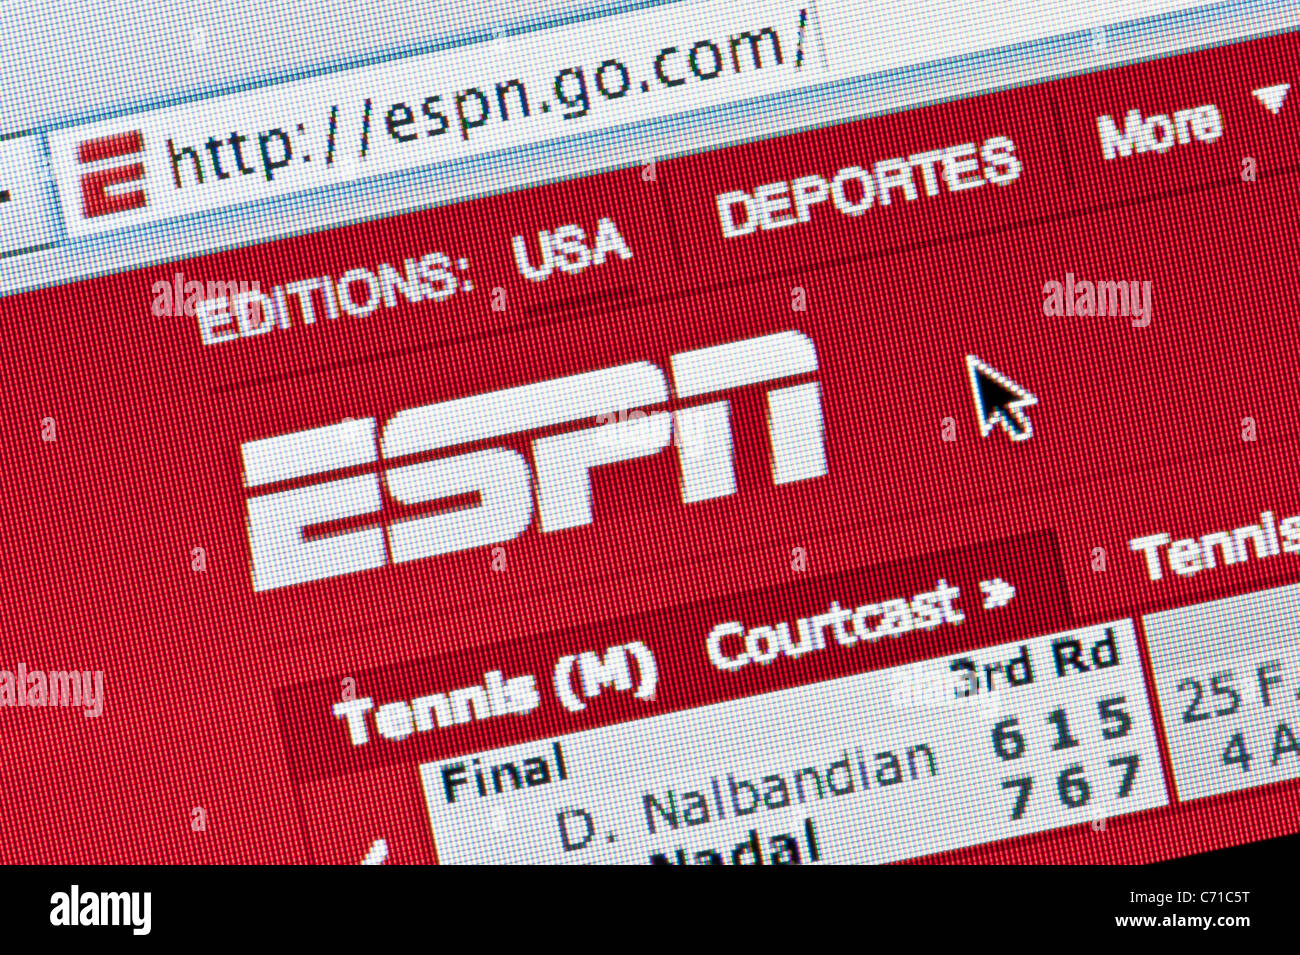 US Open Men's Semifinals LIVE on ESPN, ESPN Deportes and ESPN+ Friday,  September 8 - ESPN Press Room U.S.